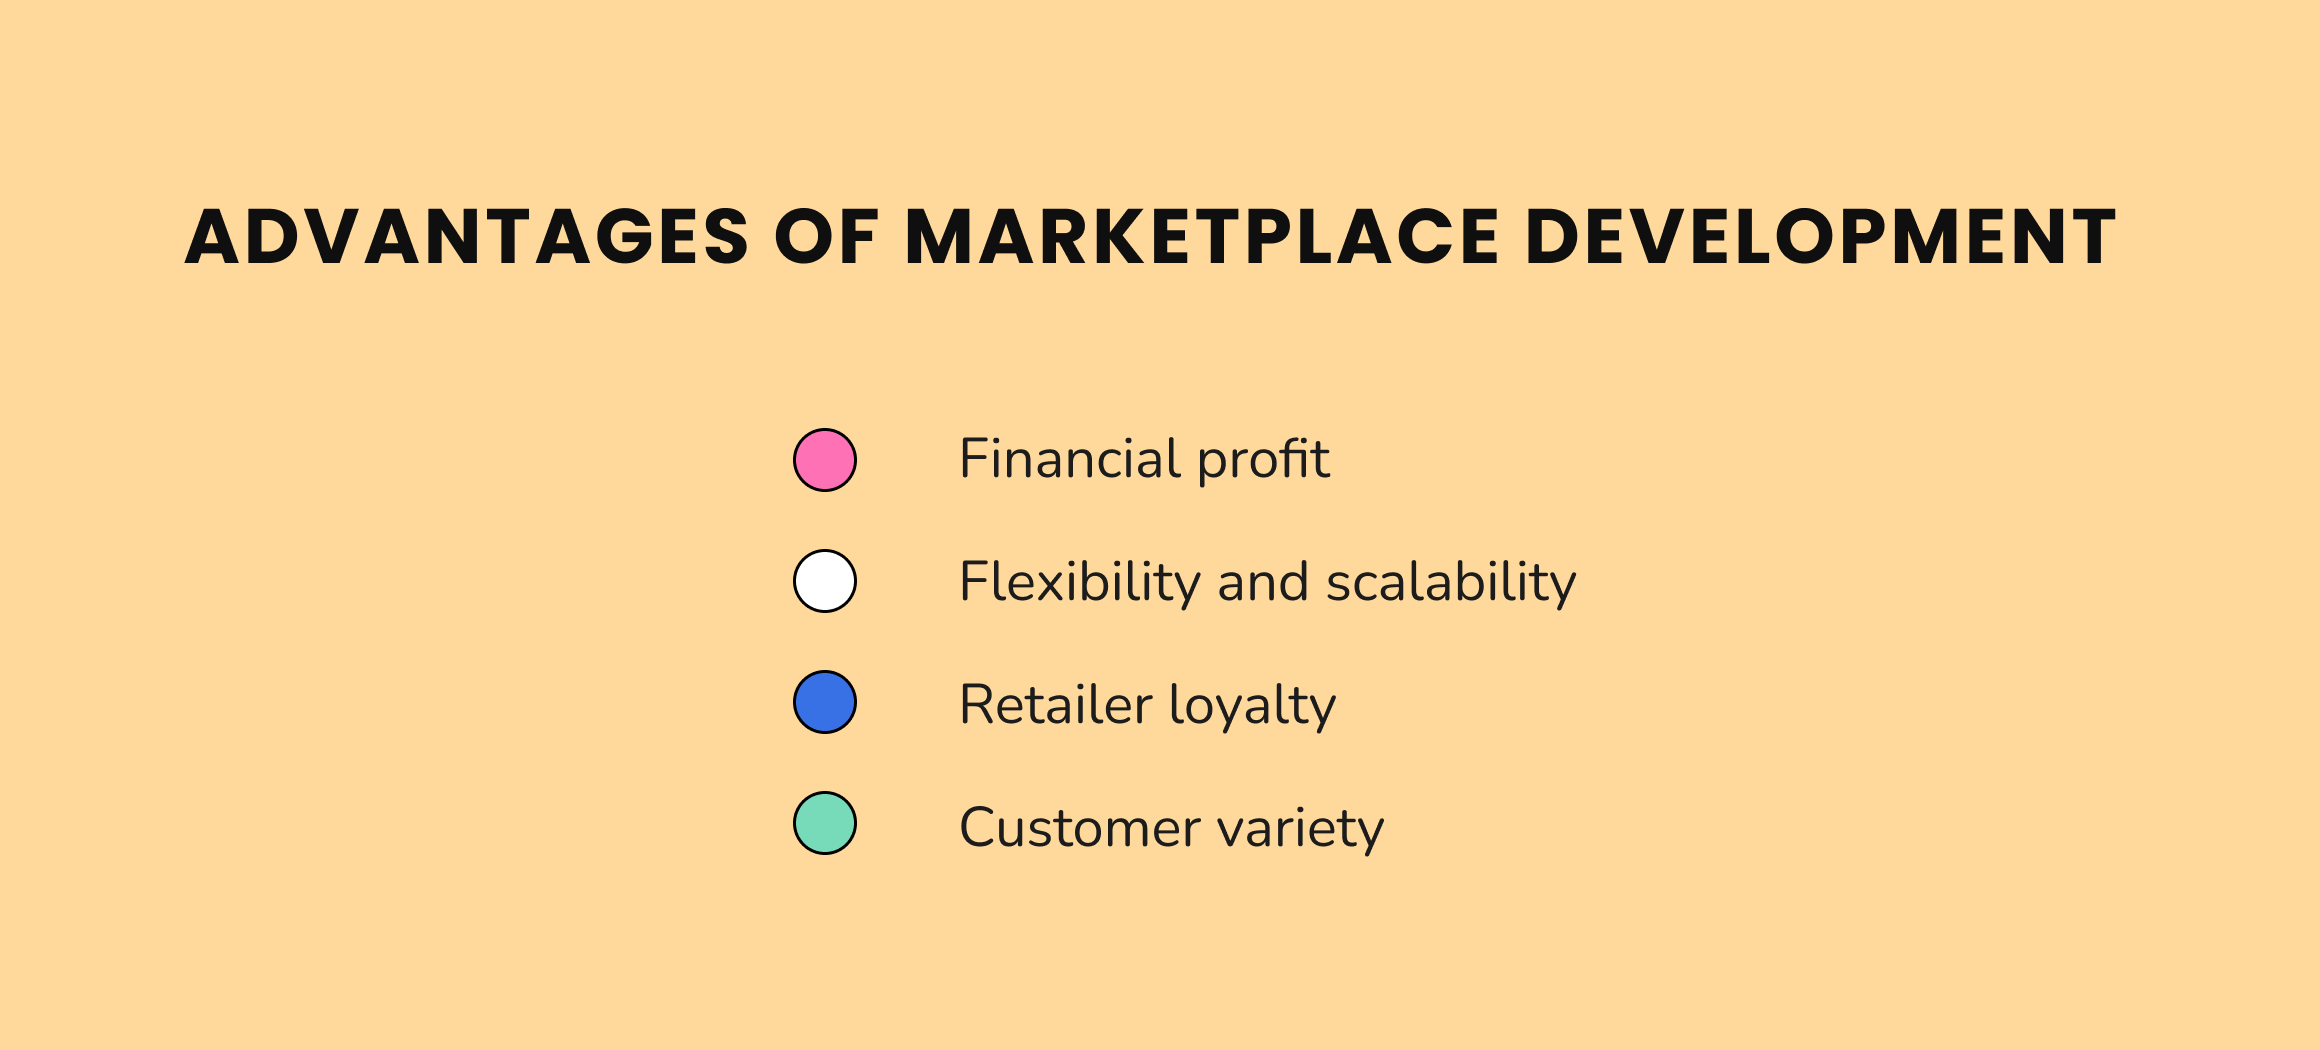 Advantages of marketplace development 